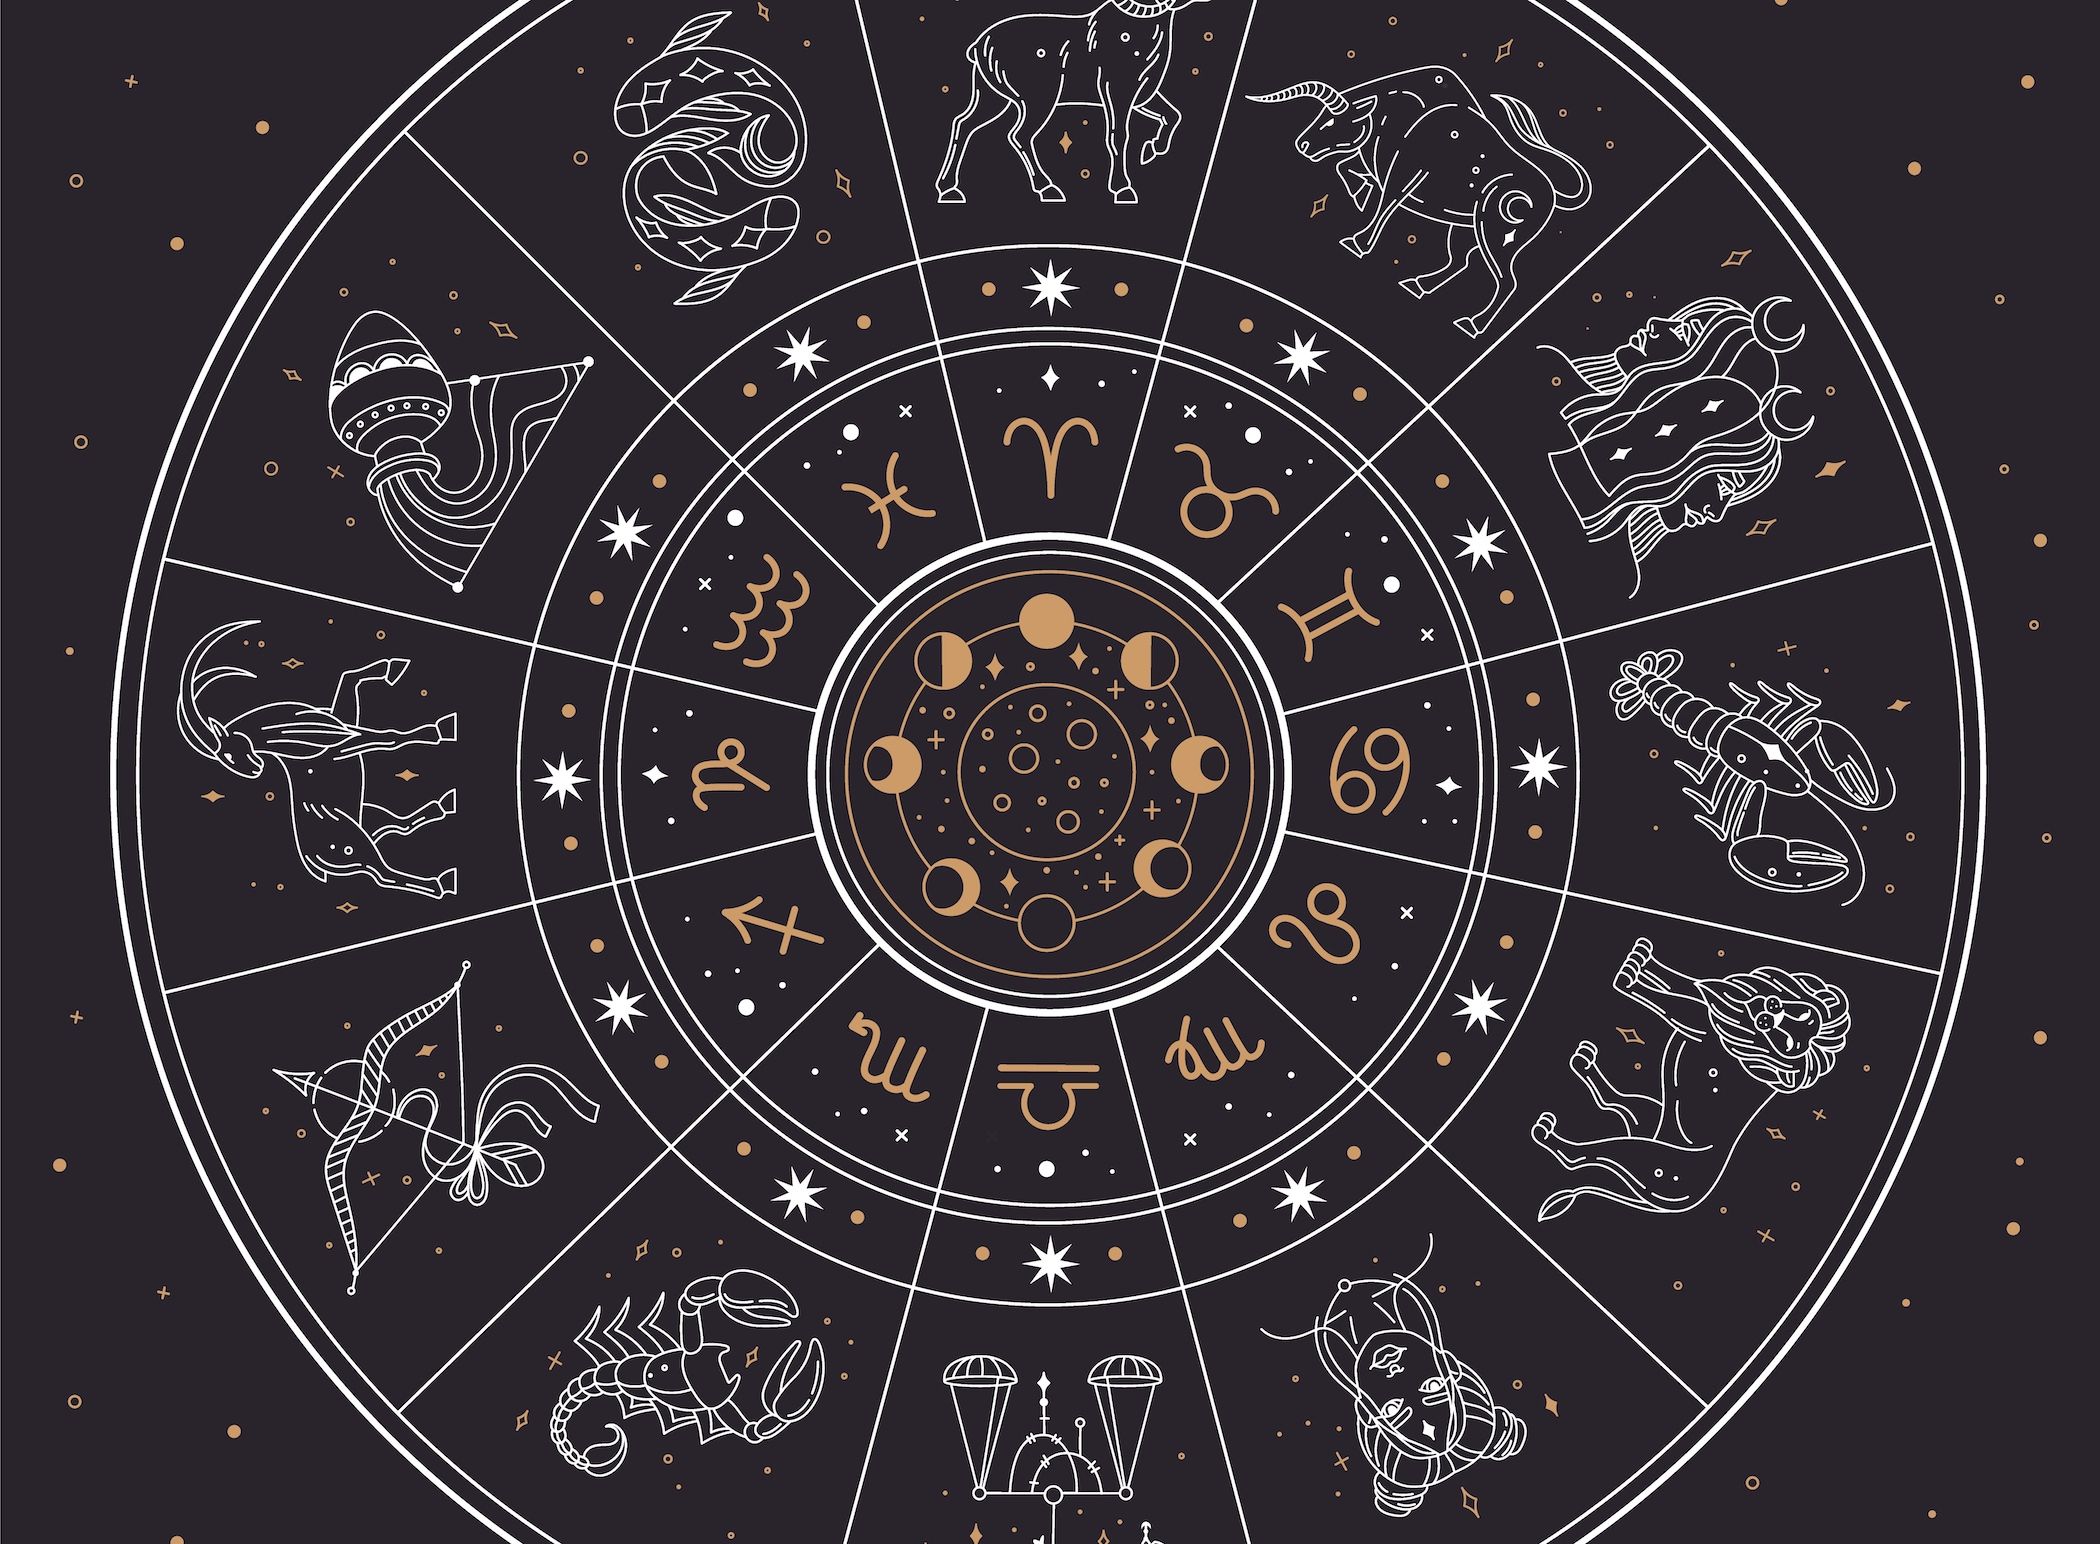 october 5th horoscope sign